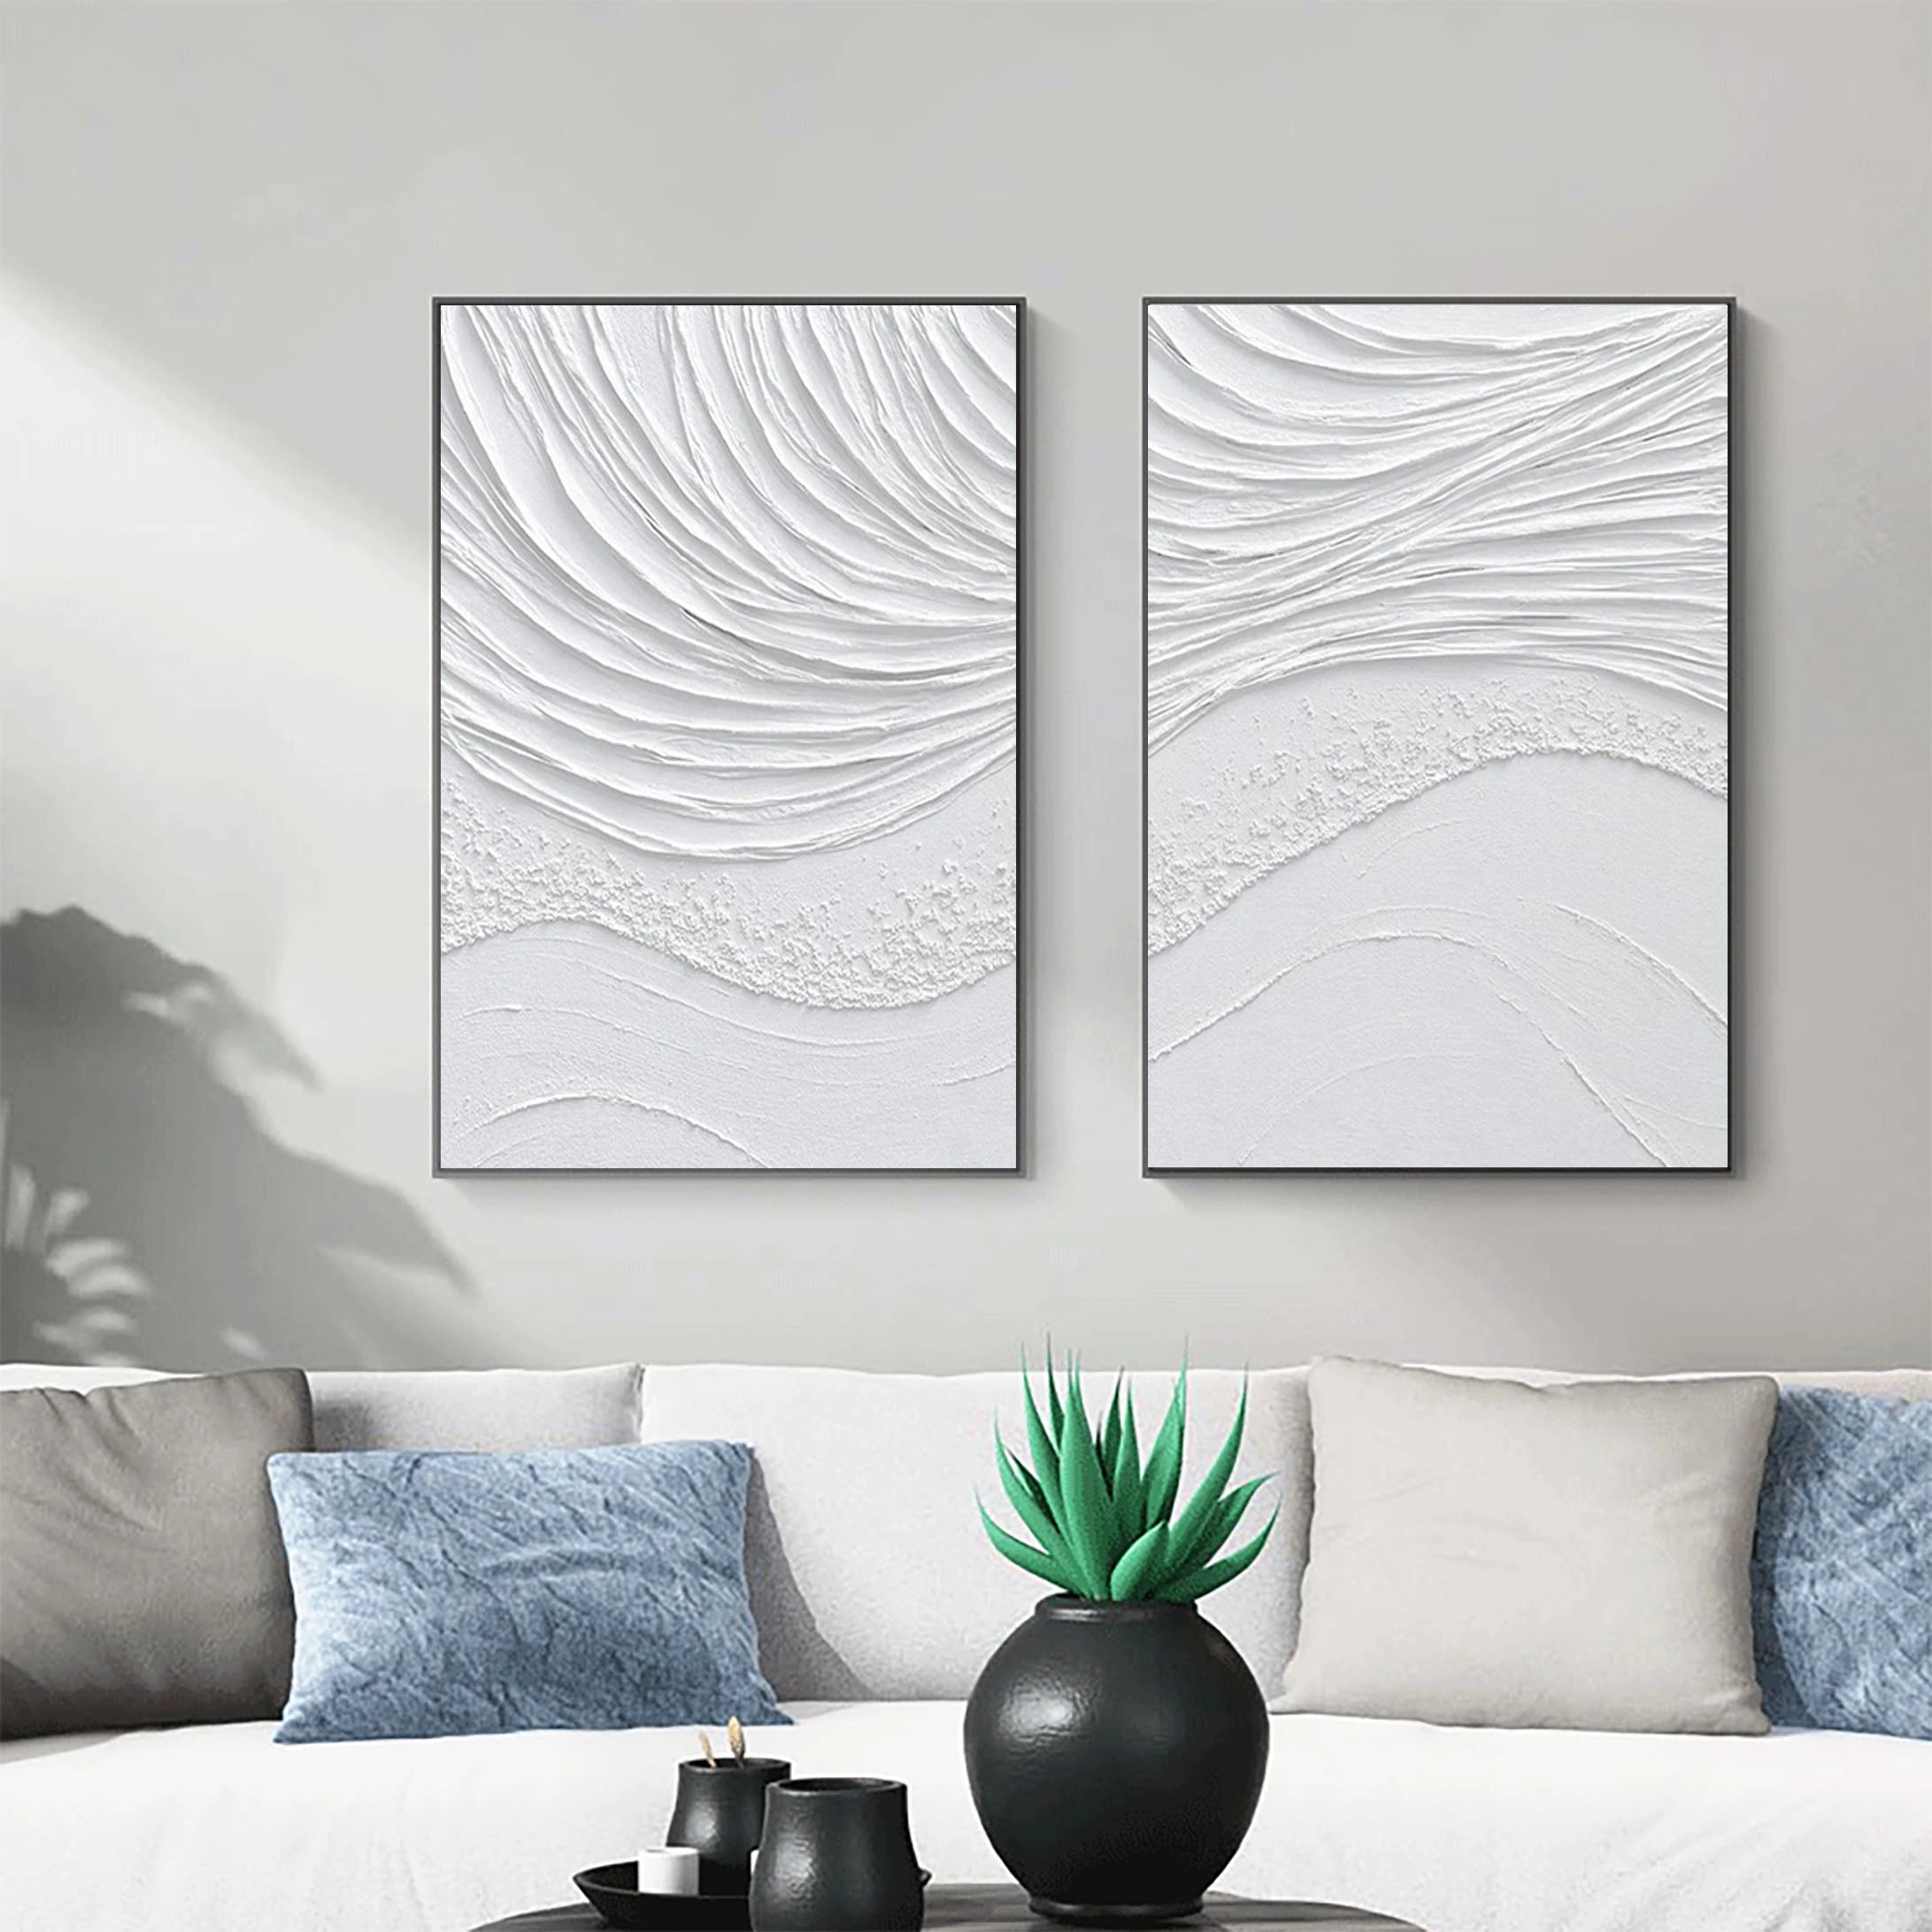 White Sea Waves Textured Plaster Art Painting On Canvas, Modern Minimalist Wall Art